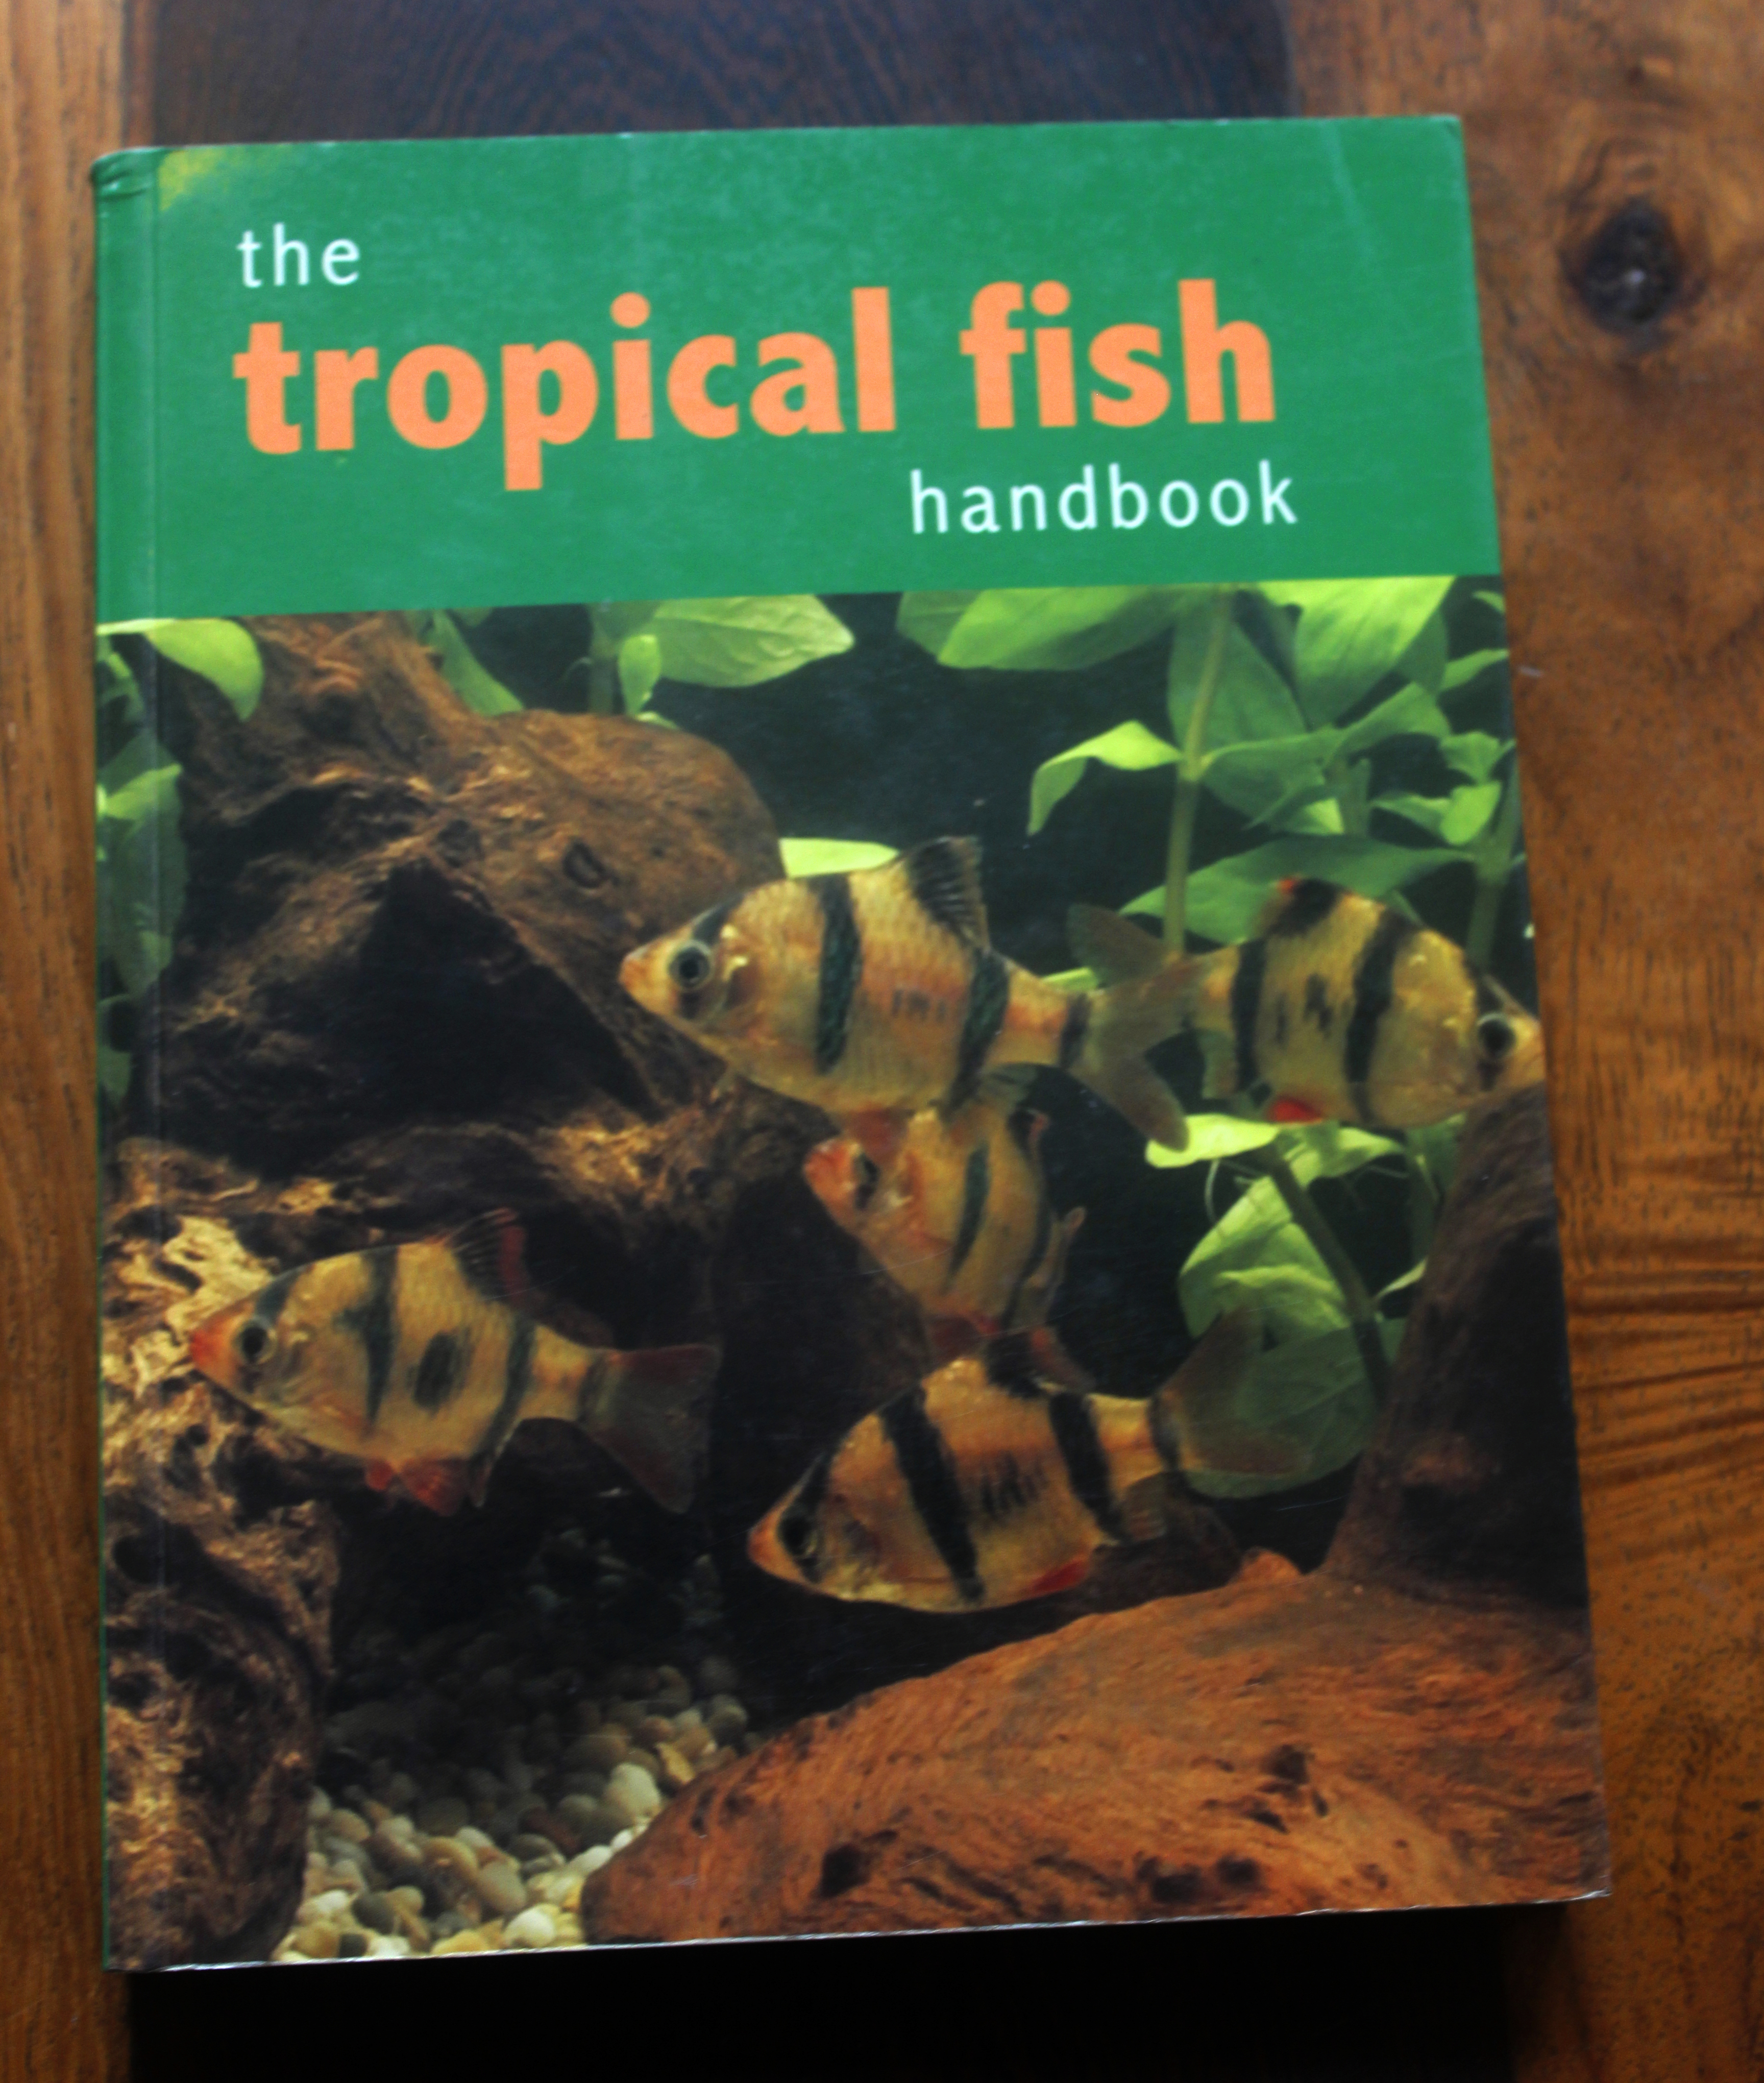 The Topical fish handbook